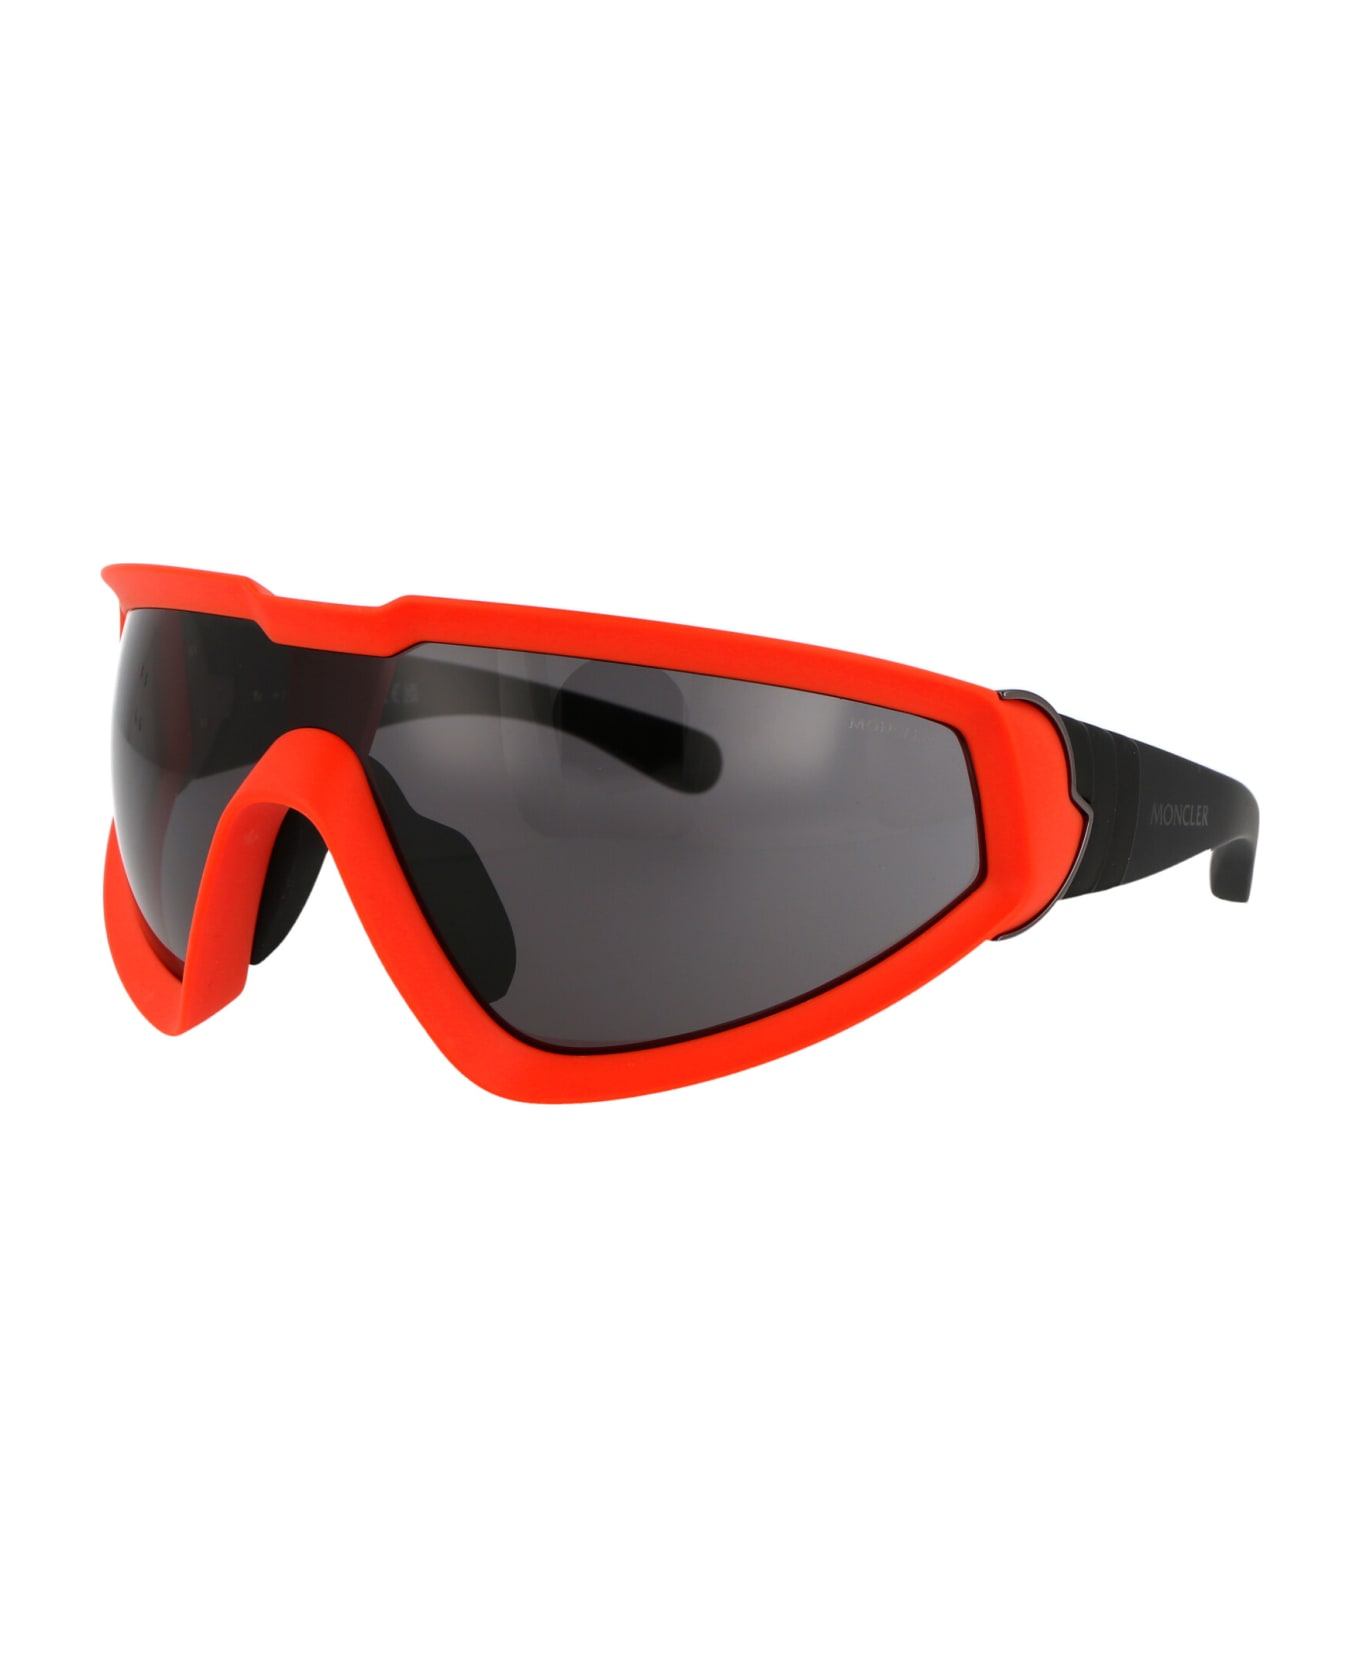 Moncler Eyewear Ml0249 Sunglasses - 43A ORANGE